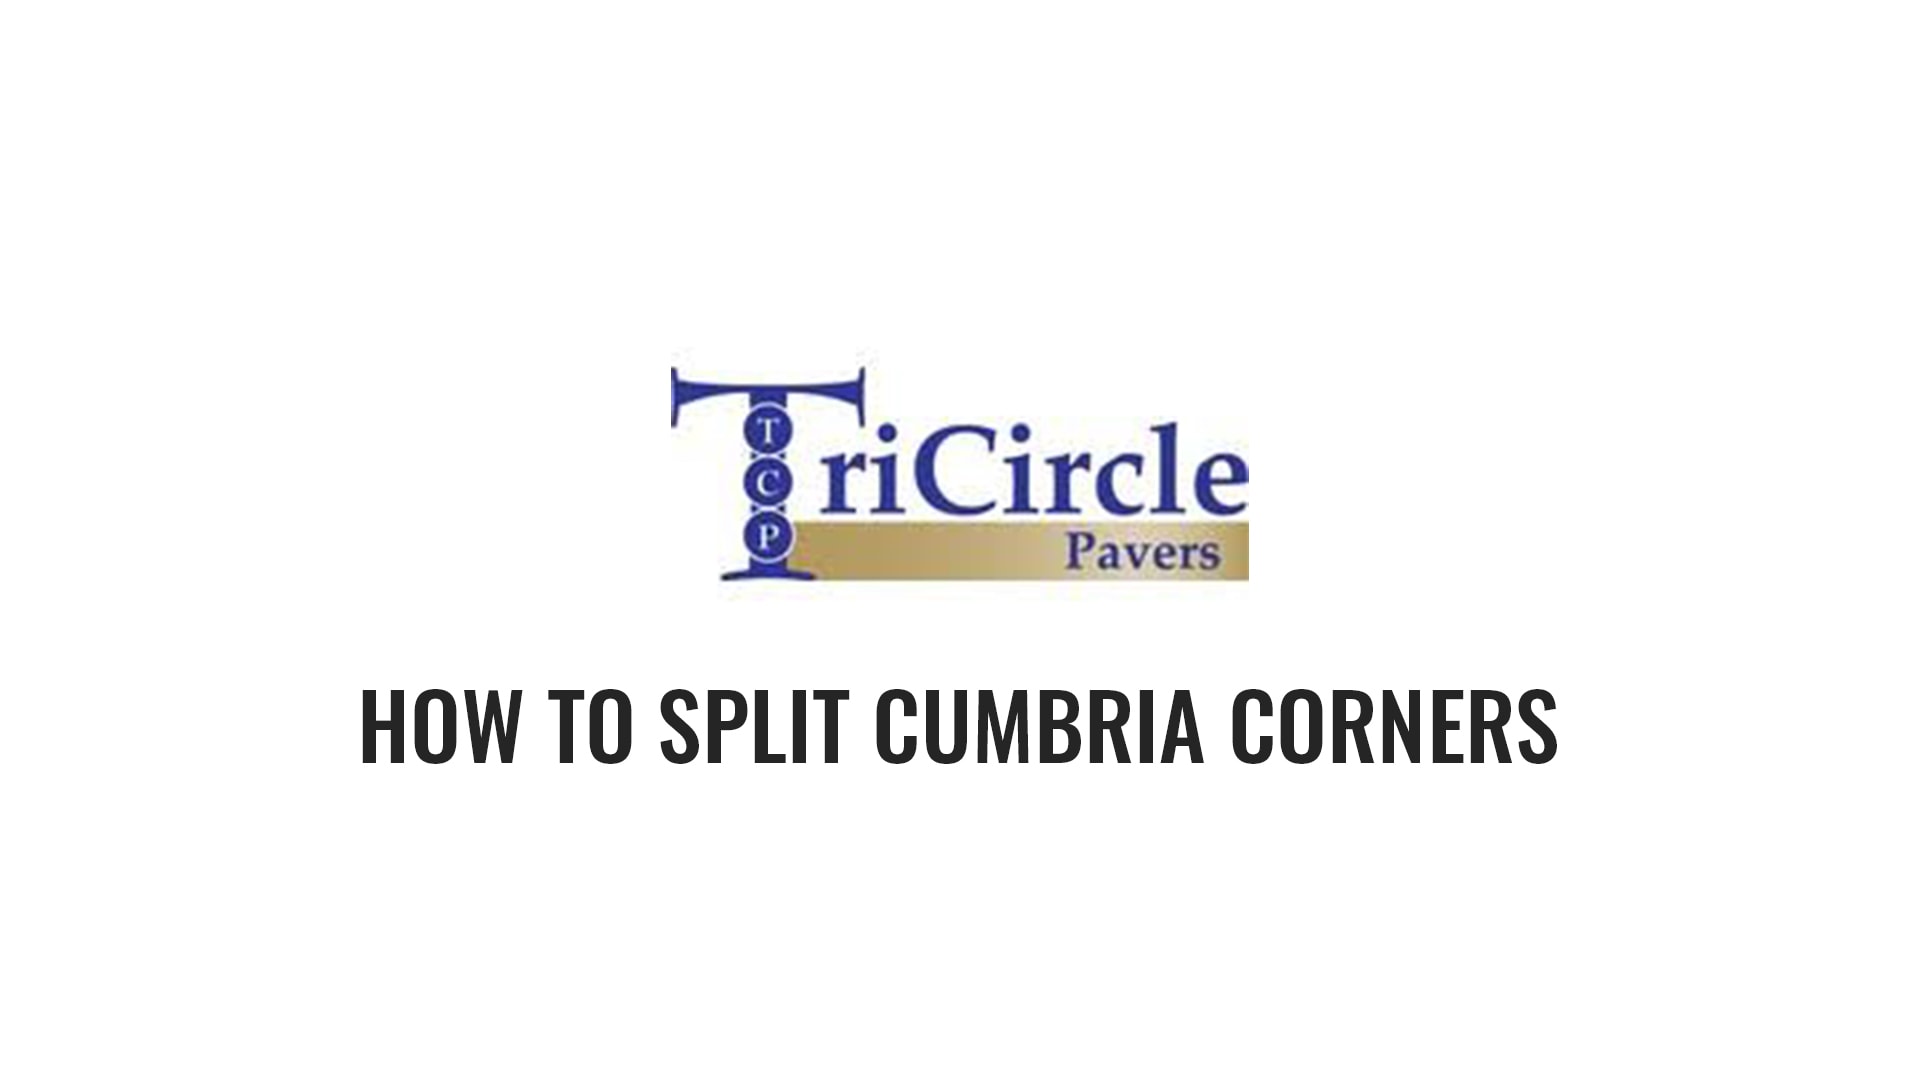 How to split cumbria corners